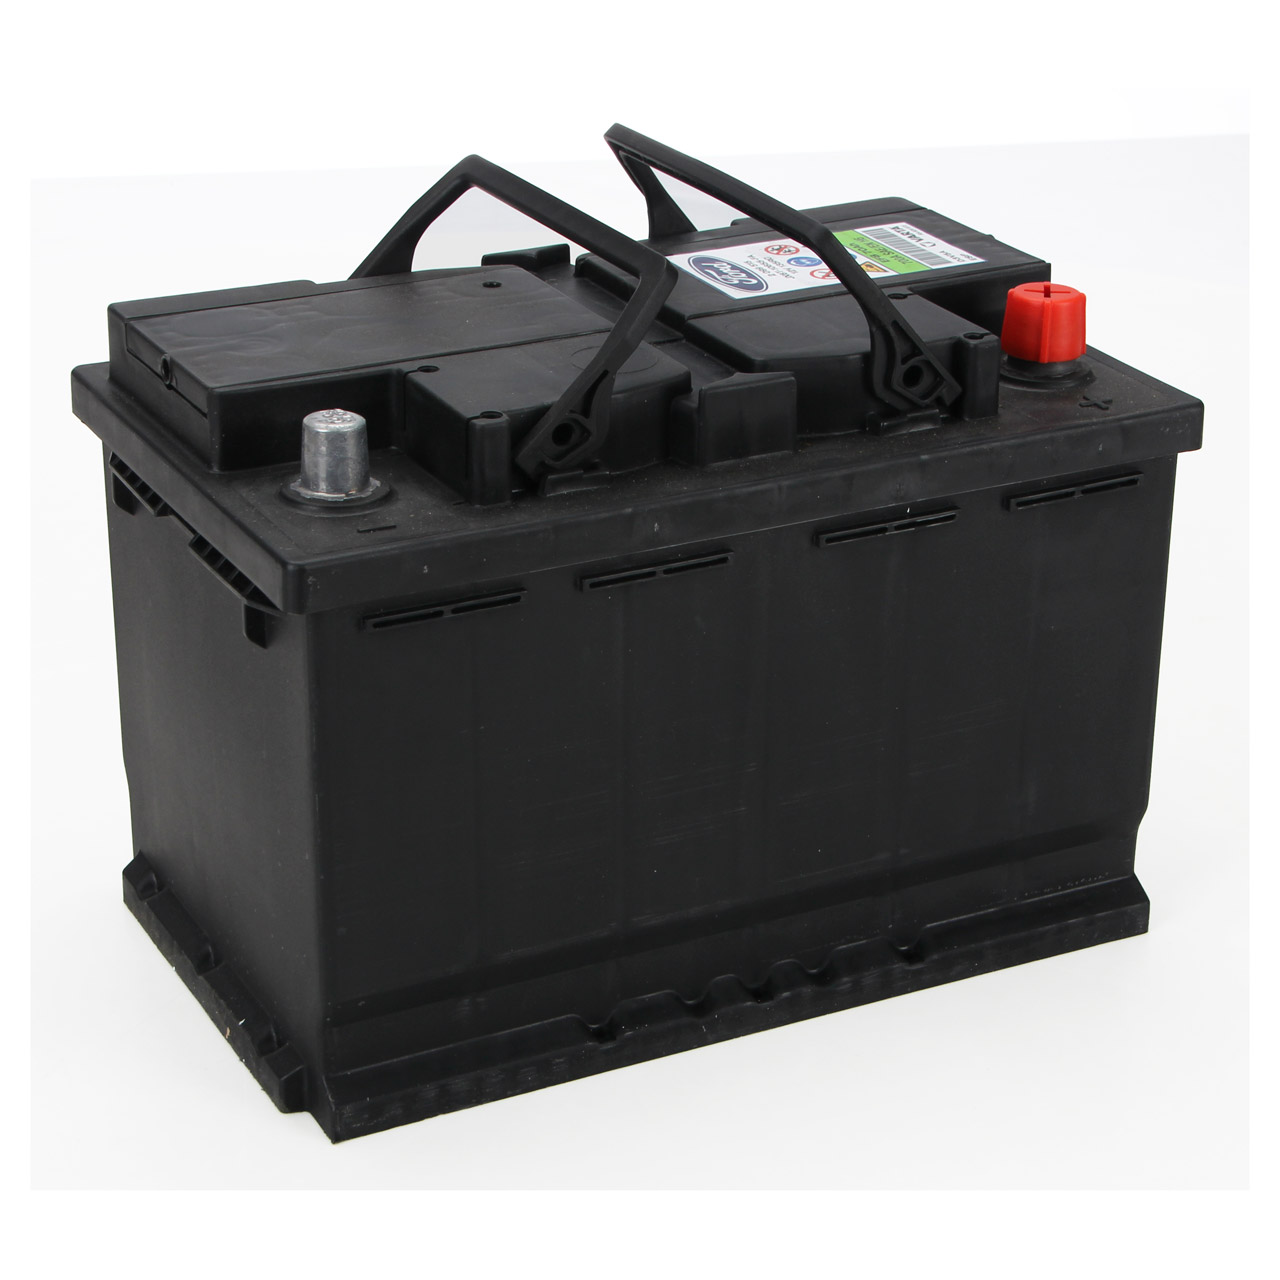 ORIGINAL Ford Autobatterie Batterie Starterbatterie 12V 70Ah 700A 2099515